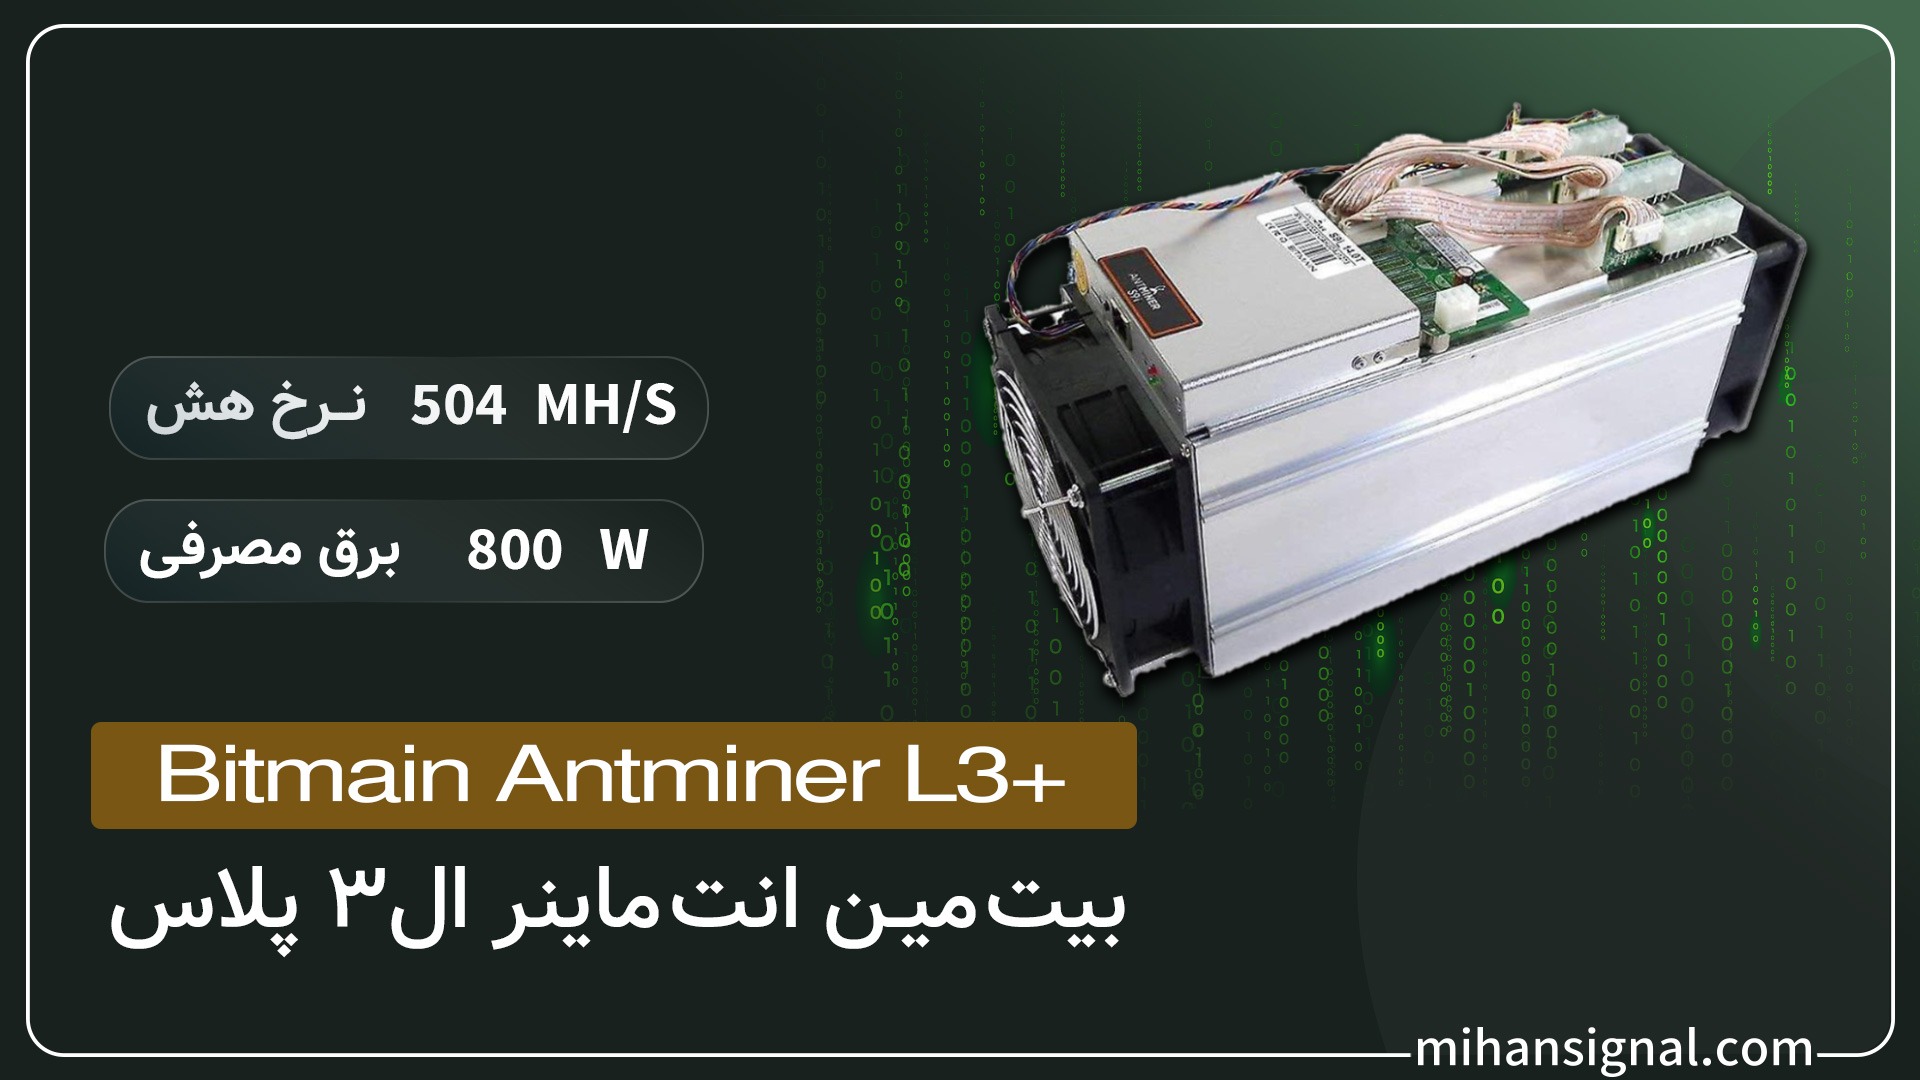 دستگاه ماینر +Bitmain Antminer L3